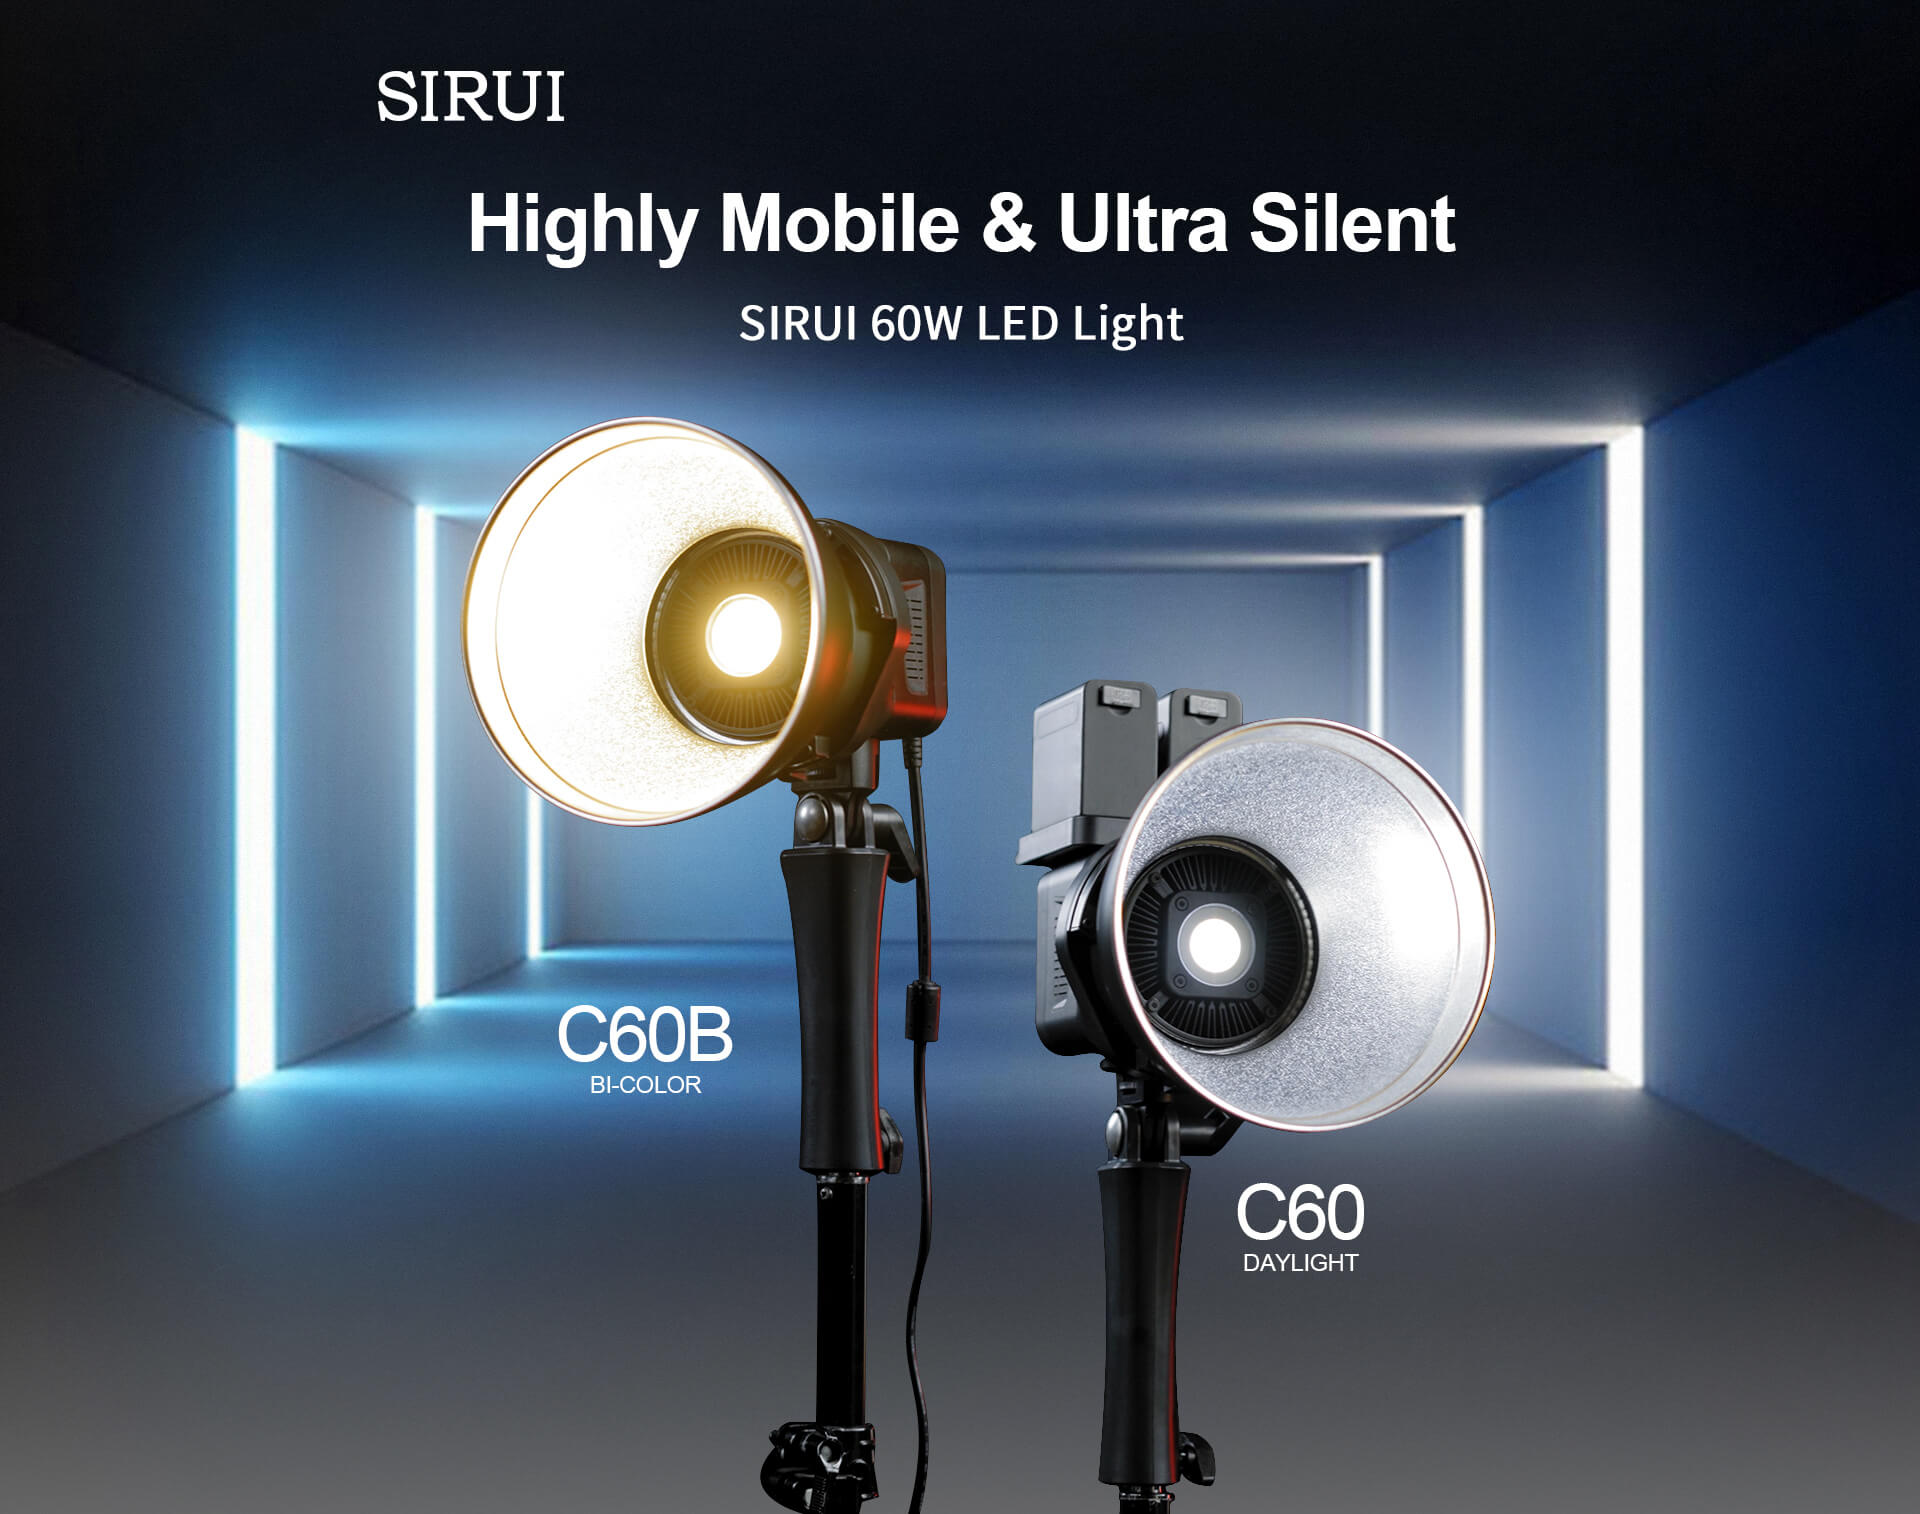 SIRUI 60W LED LIGHT